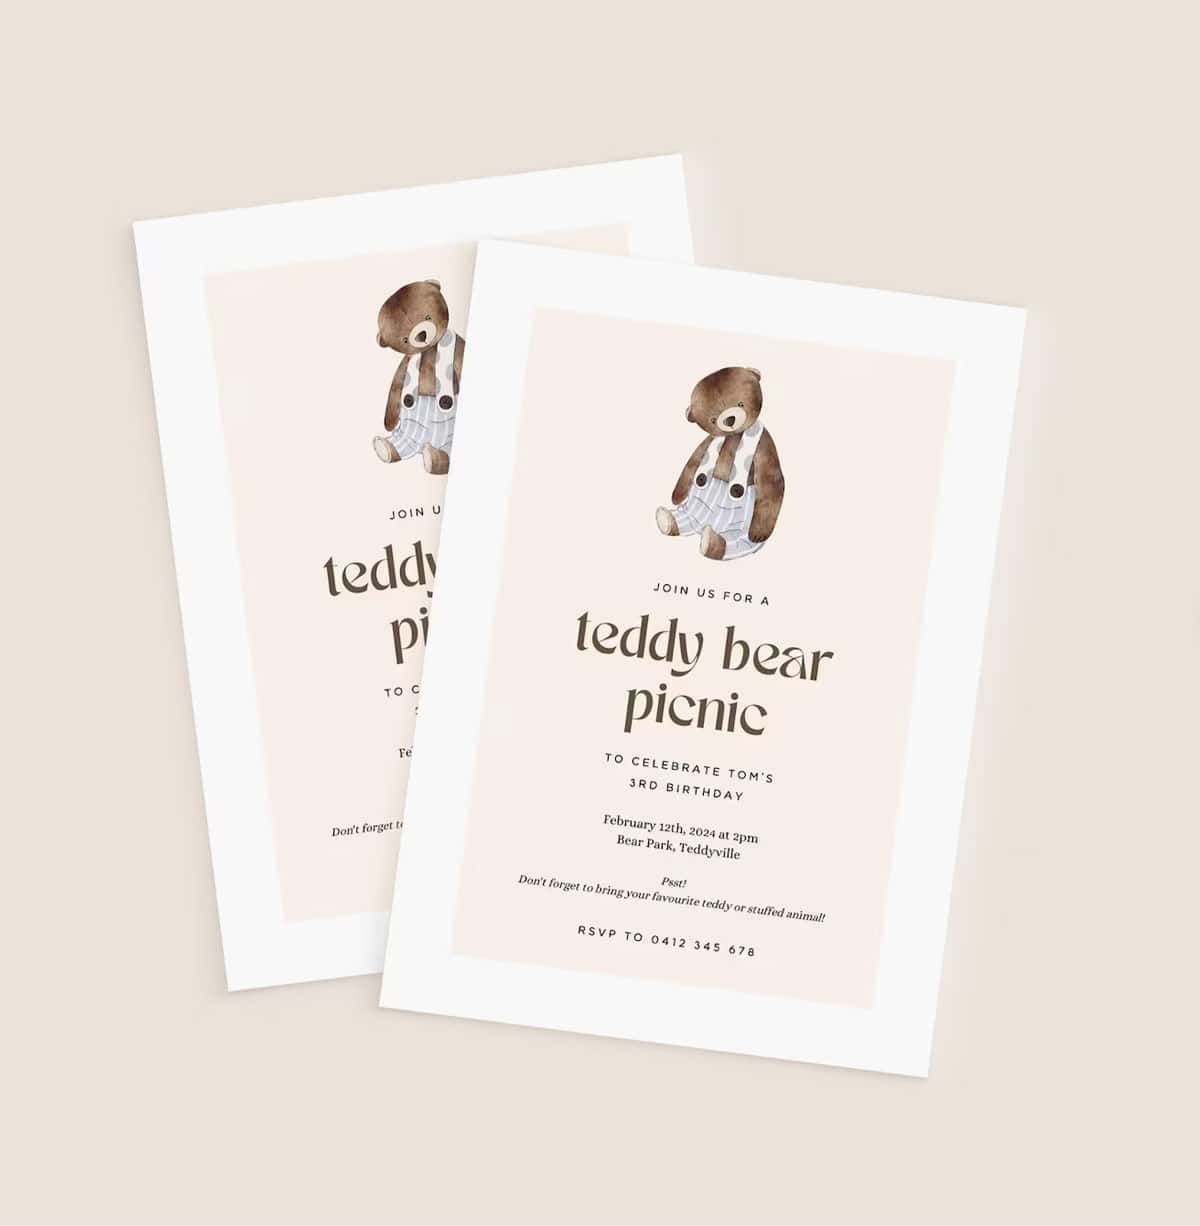 Teddy bear picnic invitations.